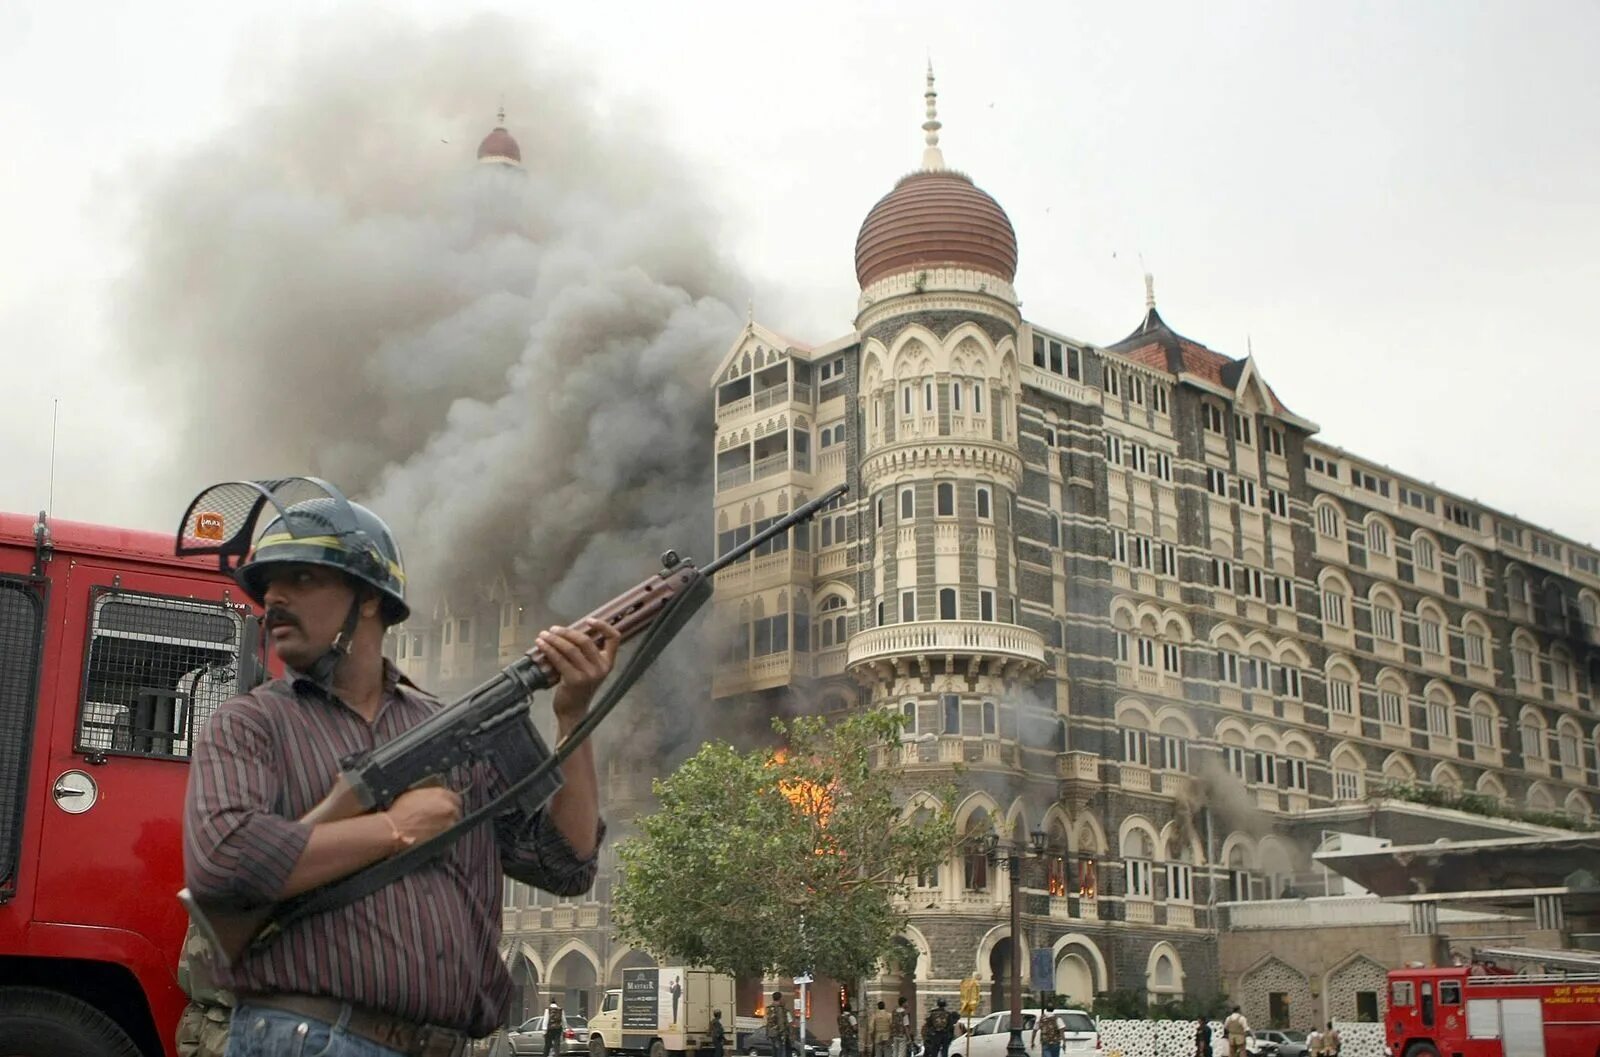 Отель мумбаи сколько погибло. Мумбаи 2008 Тадж Махал теракт. Отель Мумбаи теракт 2008. Индия 2008 теракт отель Мумбаи. Отель Тадж Махал в Мумбаи теракт 2008.